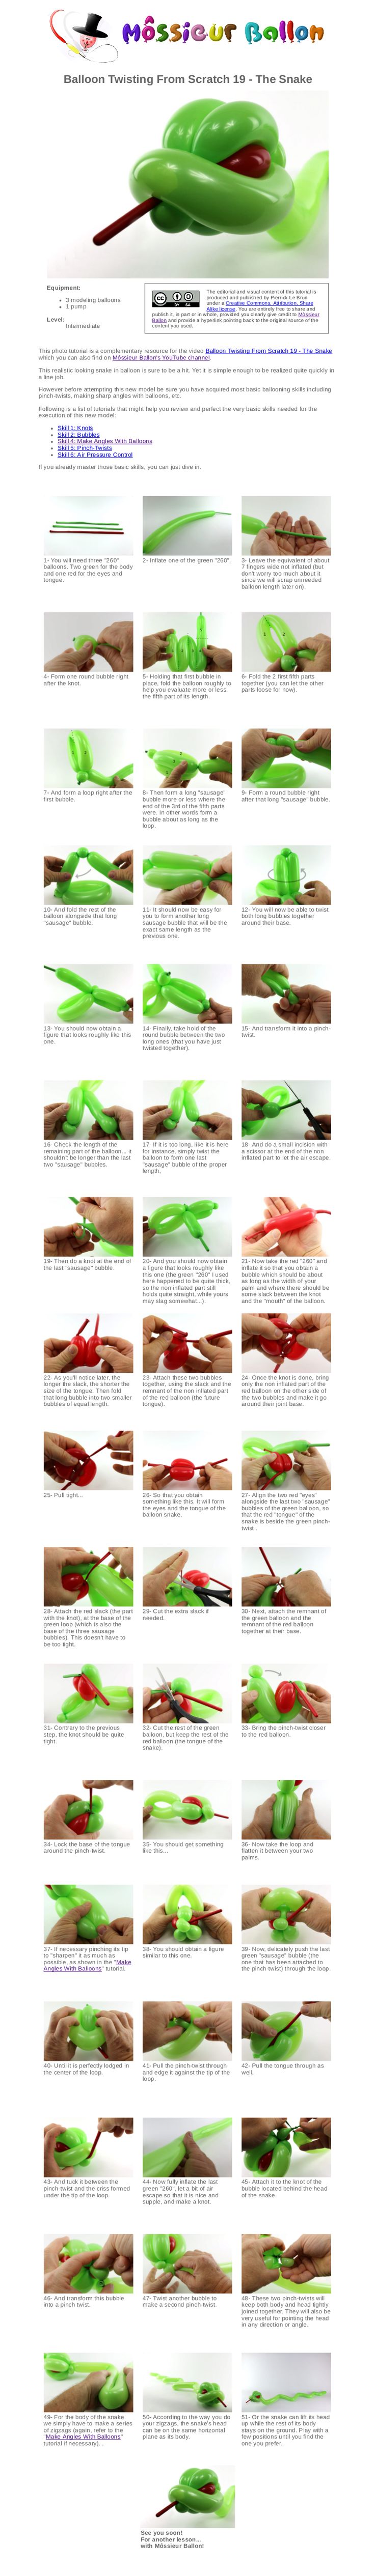 balloon animal instructions pdf